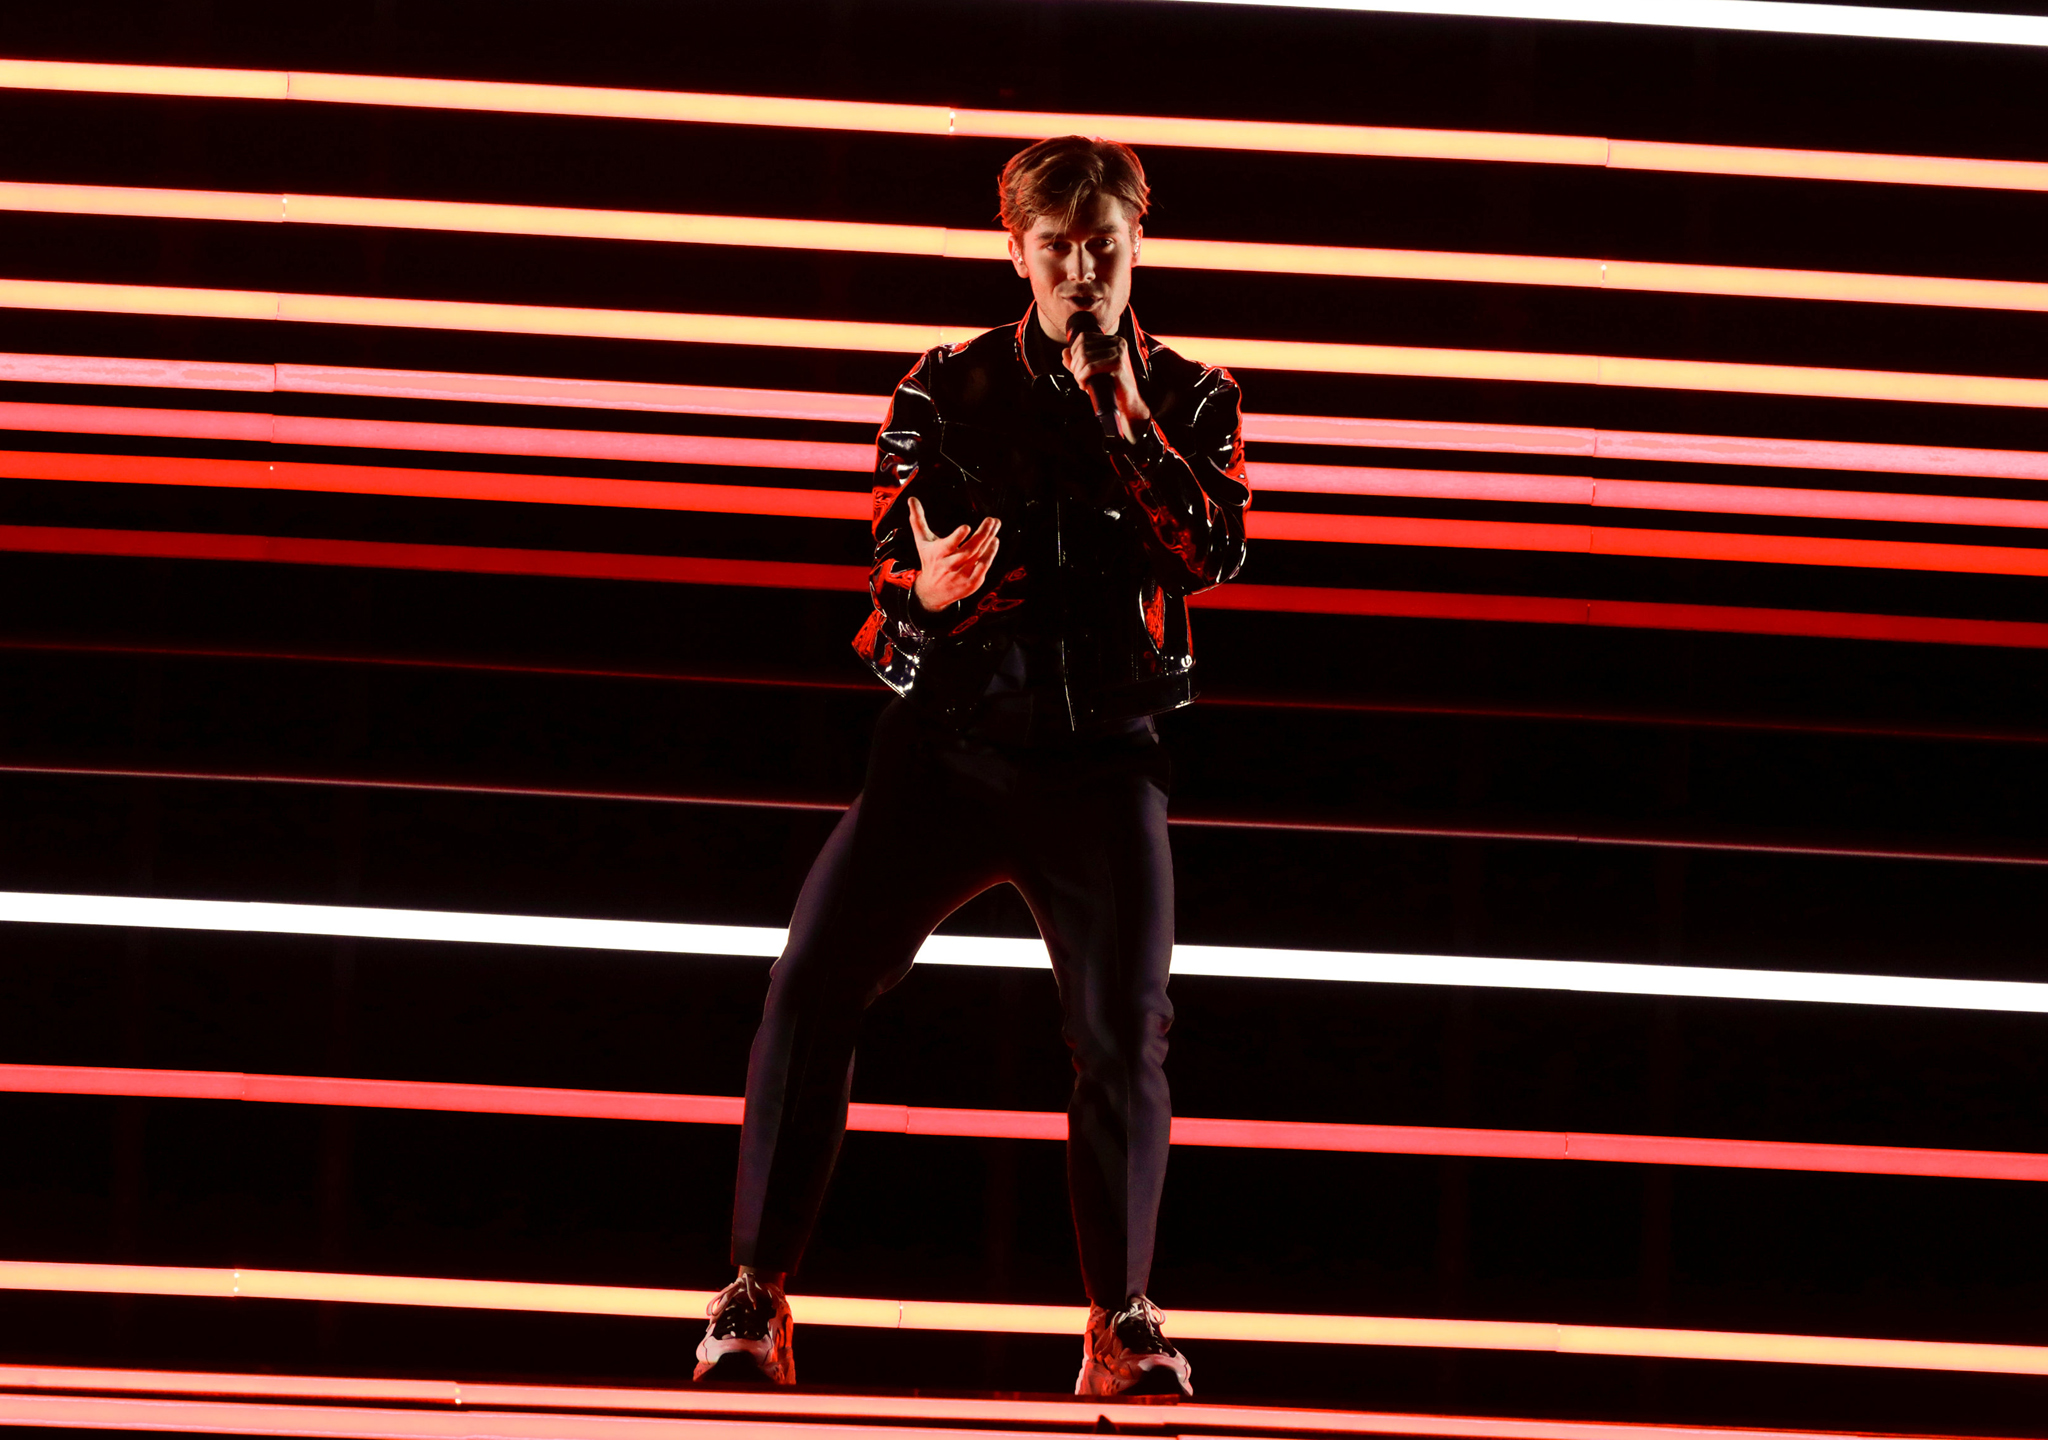 Benjamin Ingrosso representa a Suecia en Eurovisión 2018 con la canción “Dance you off”